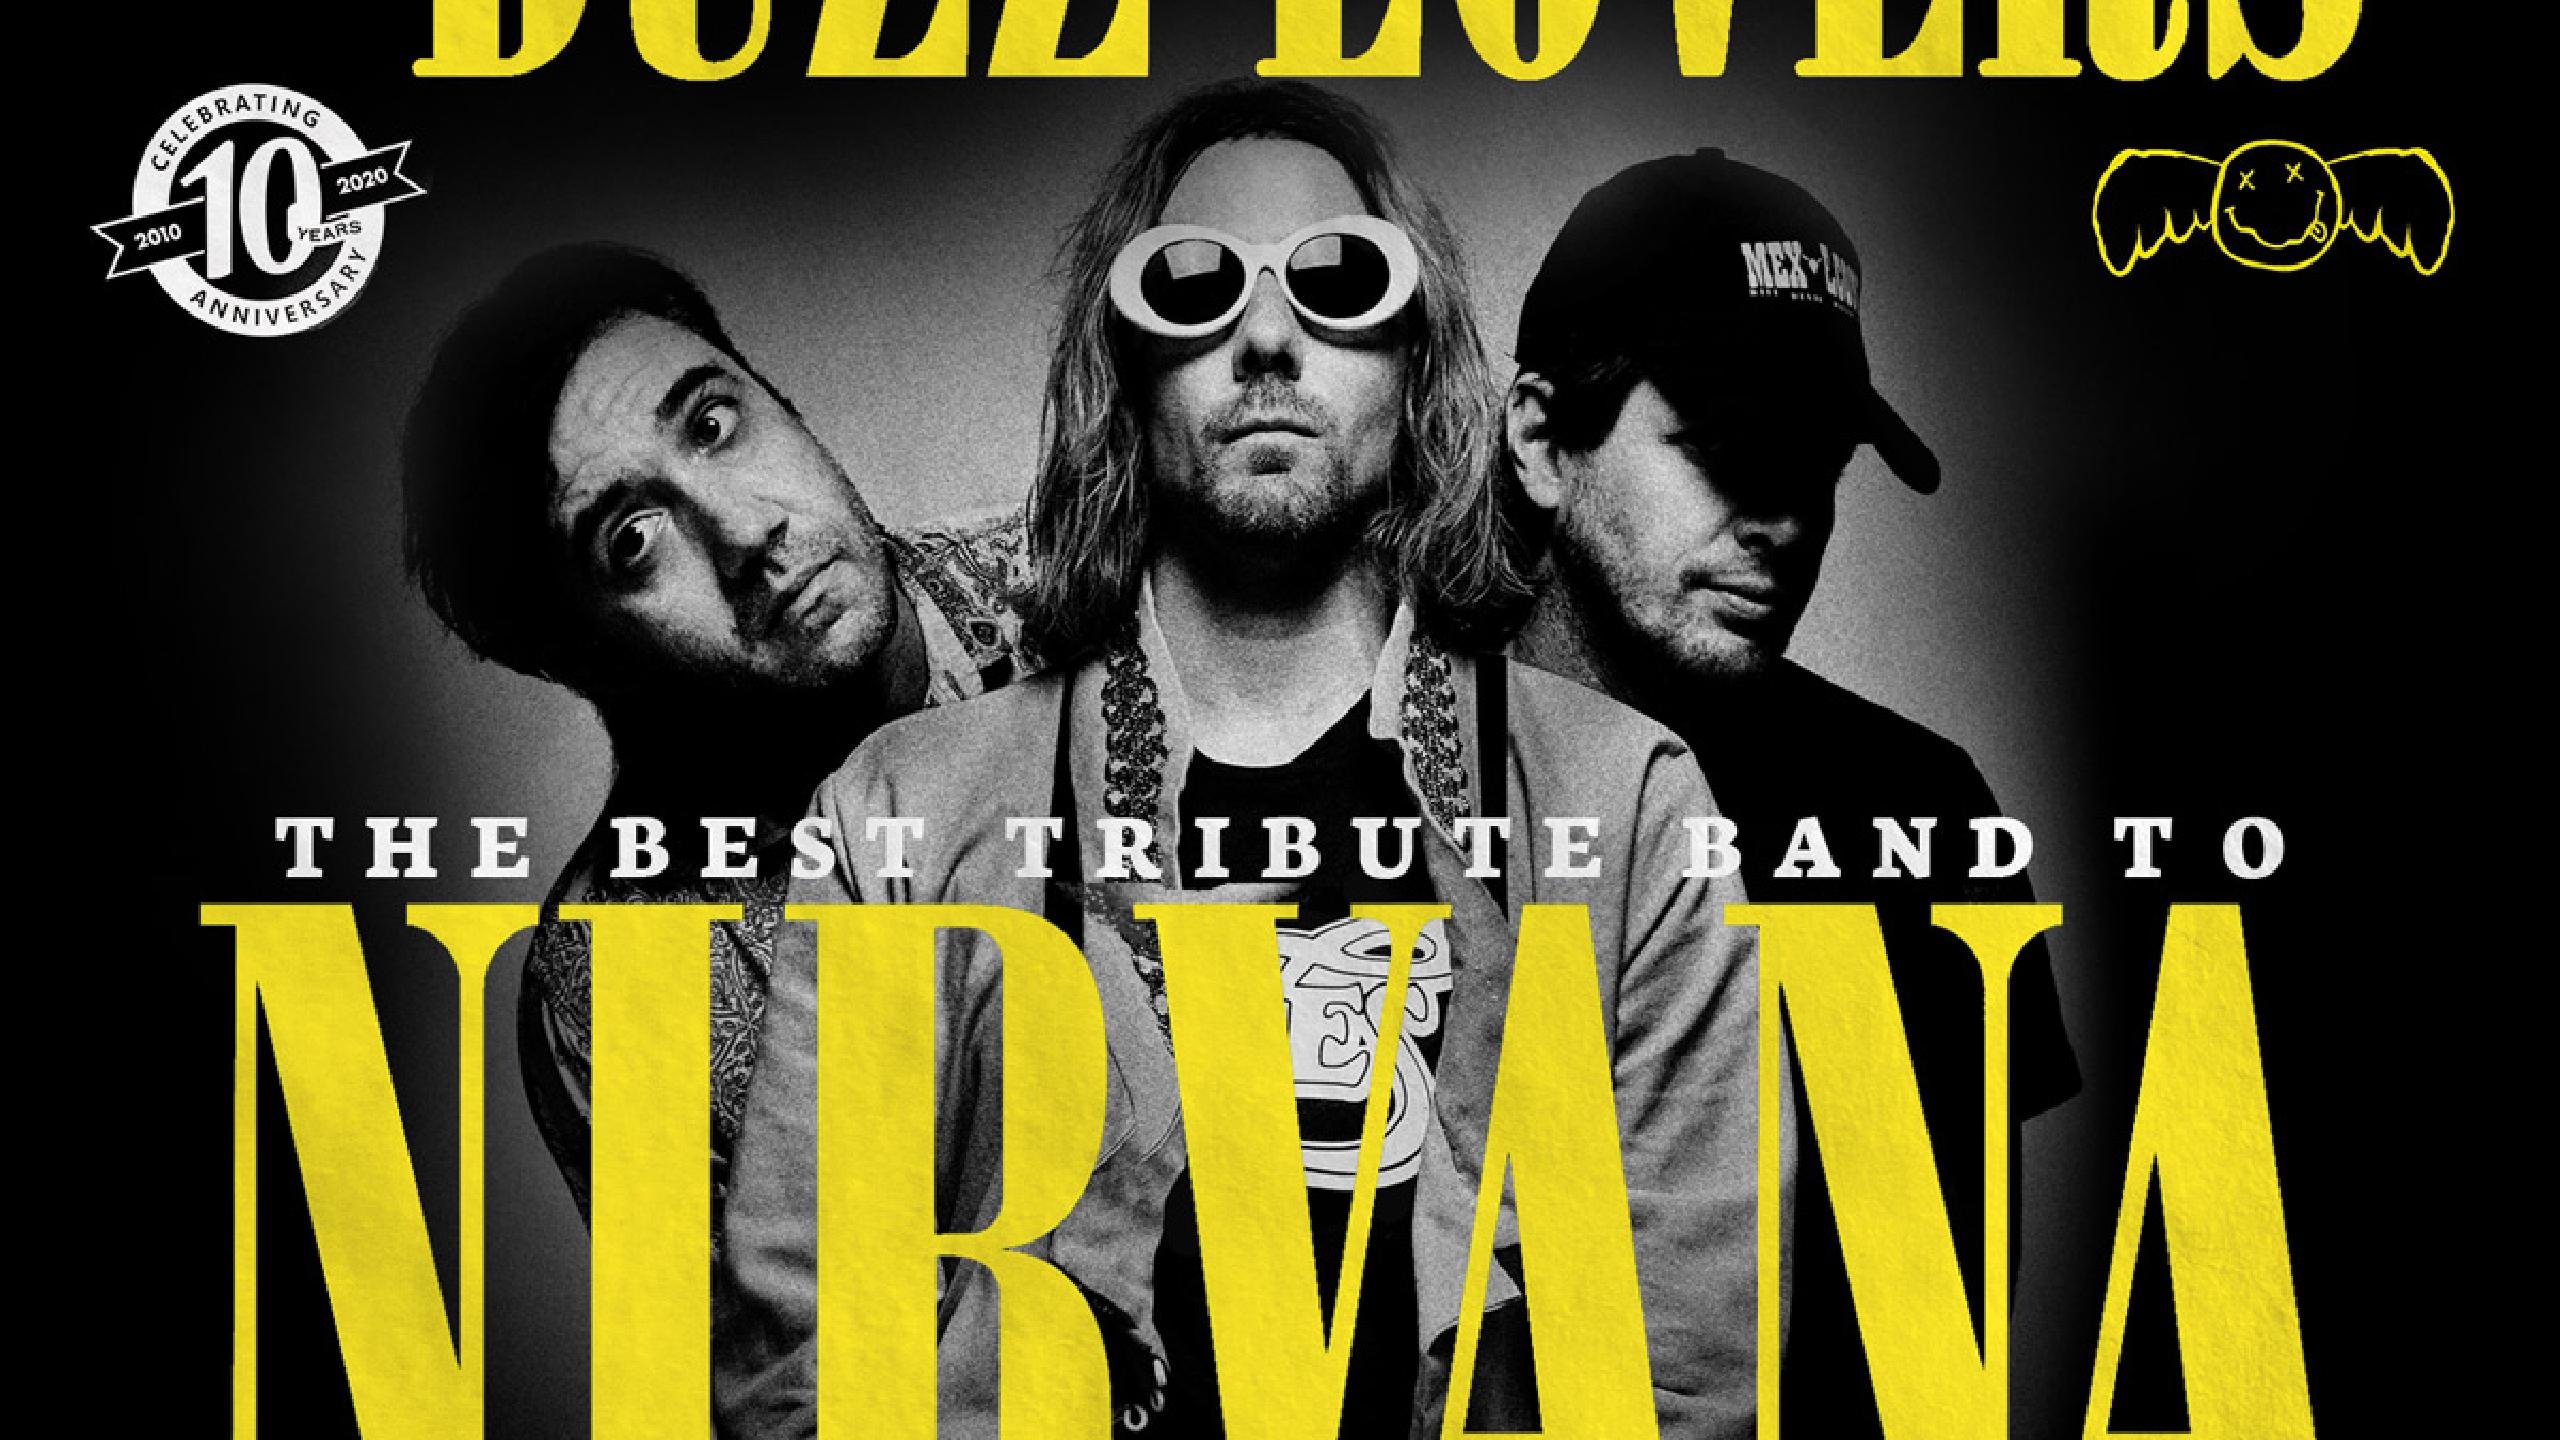 Nirvana buzz. The Buzz lovers группа. Группа Nirvana. Группа Nirvana 2020. Nirvana альбомы.